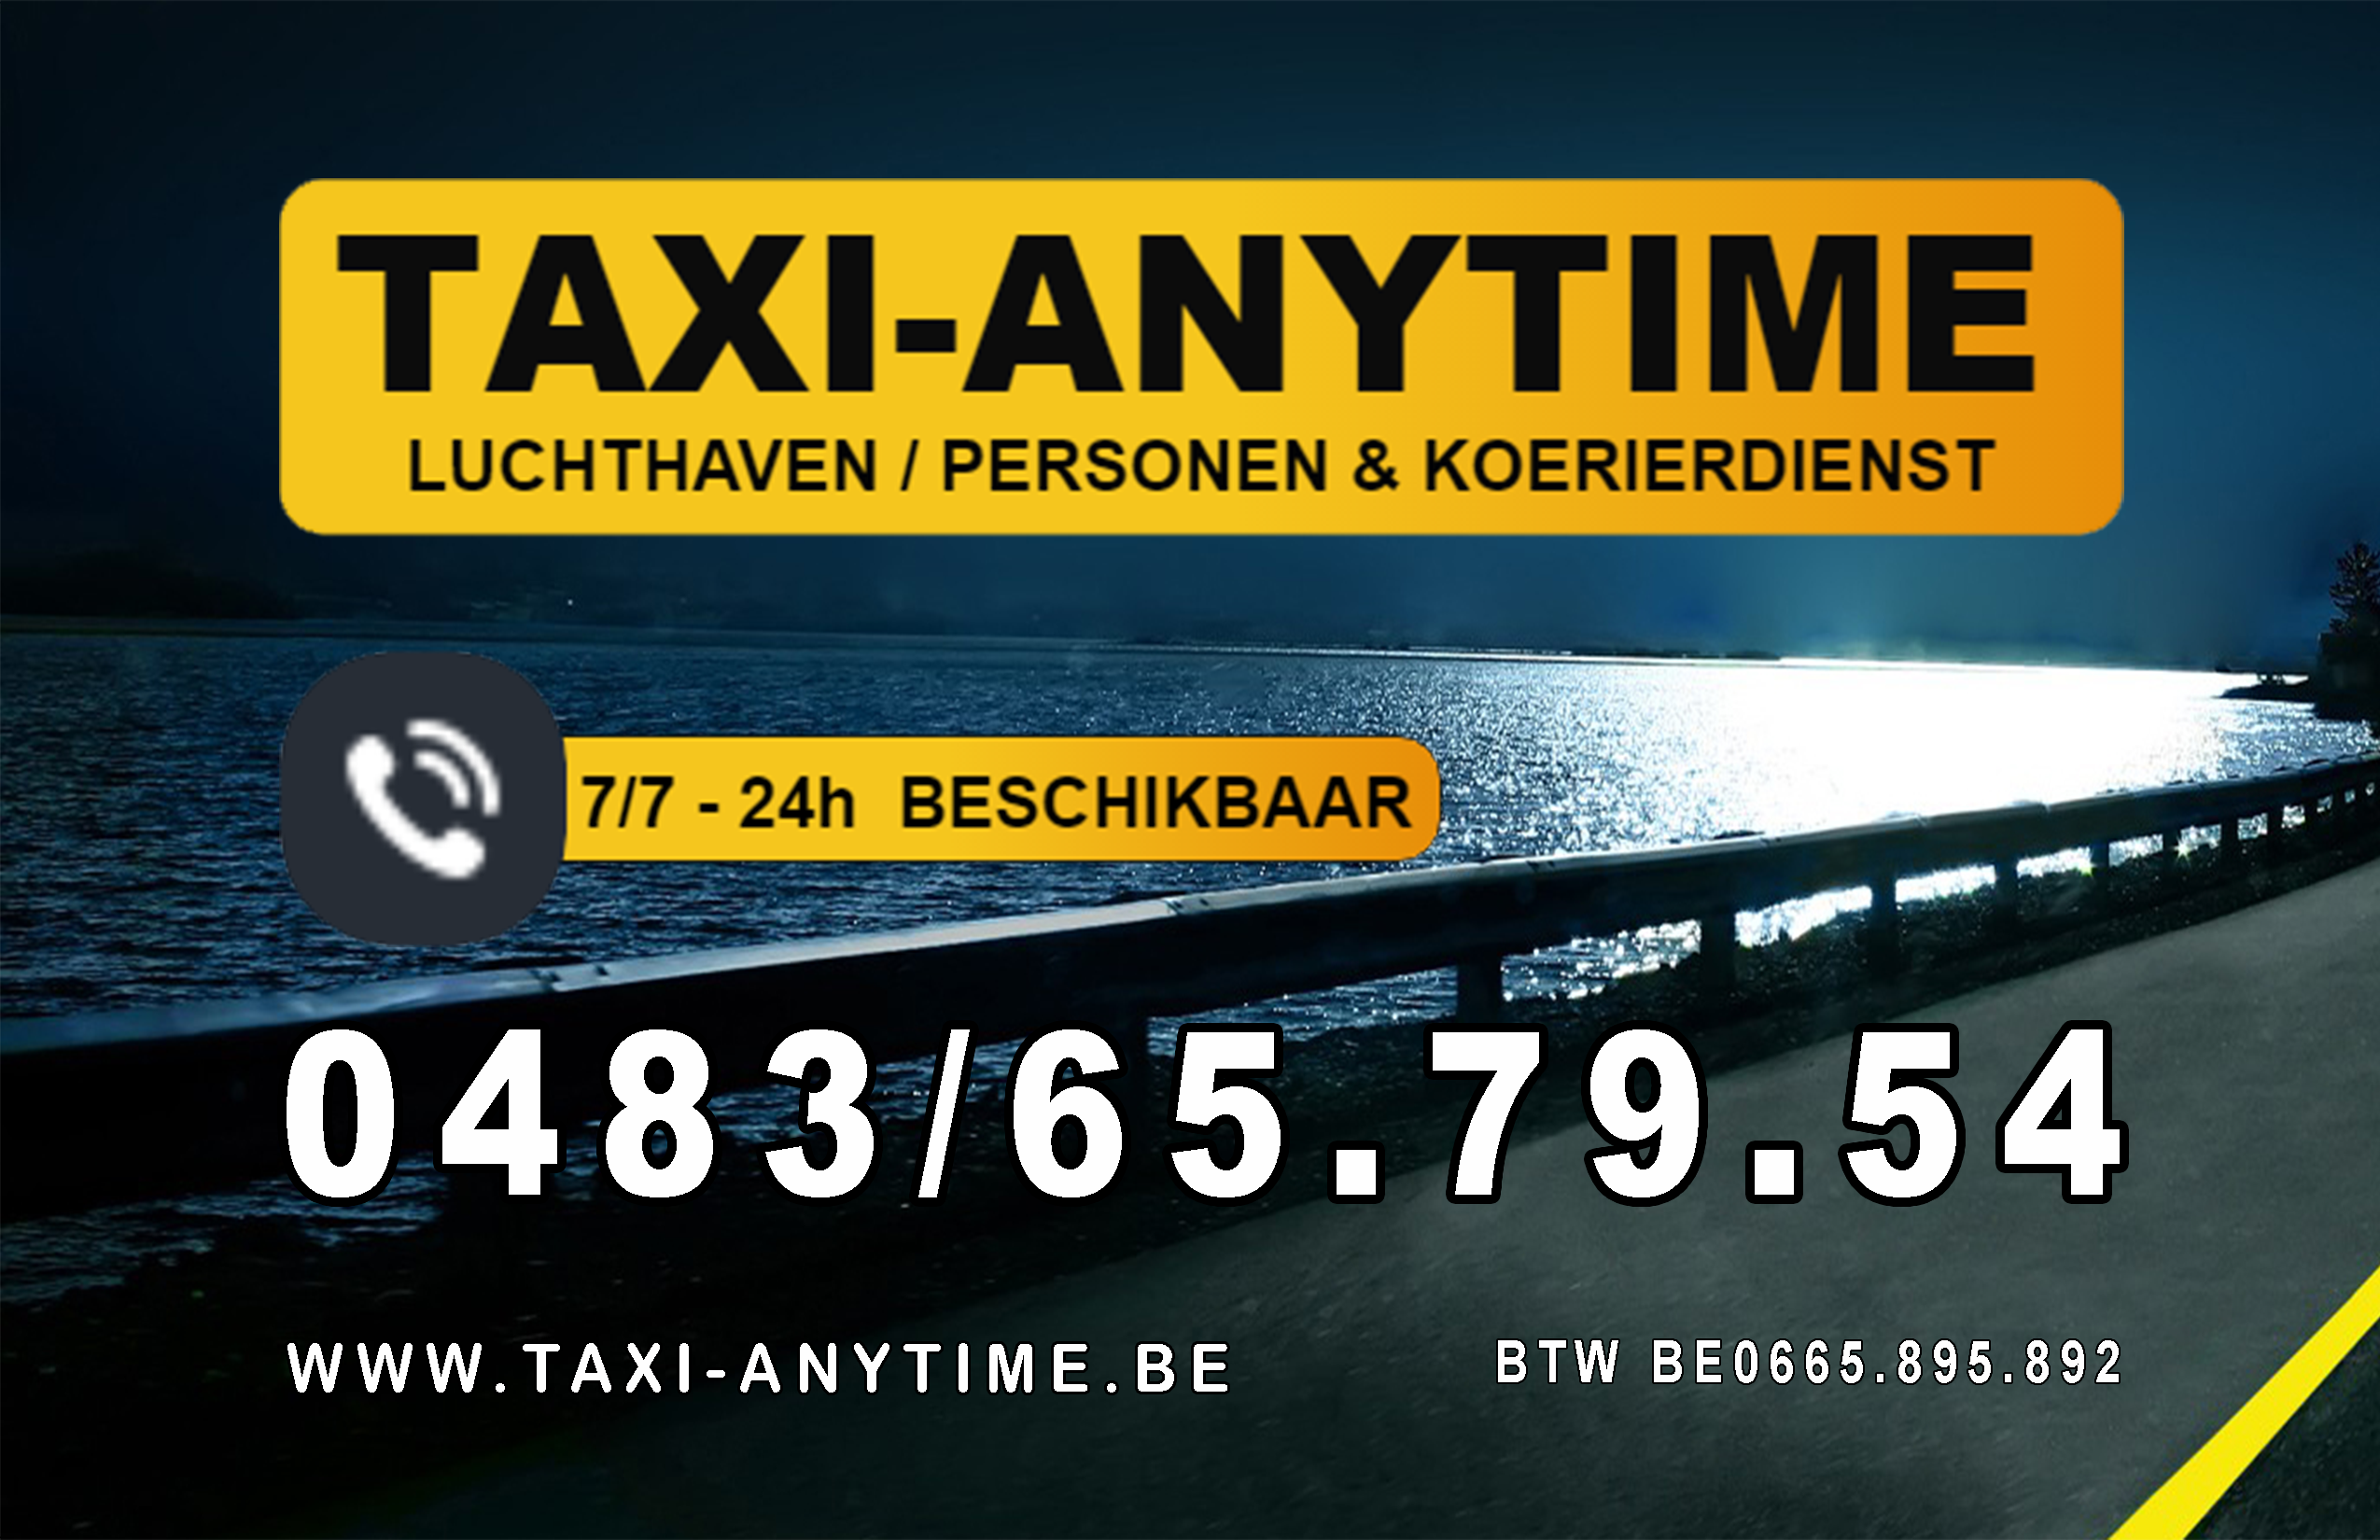 taxibedrijven met luchthavenvervoer Eindhout Taxi-anytime